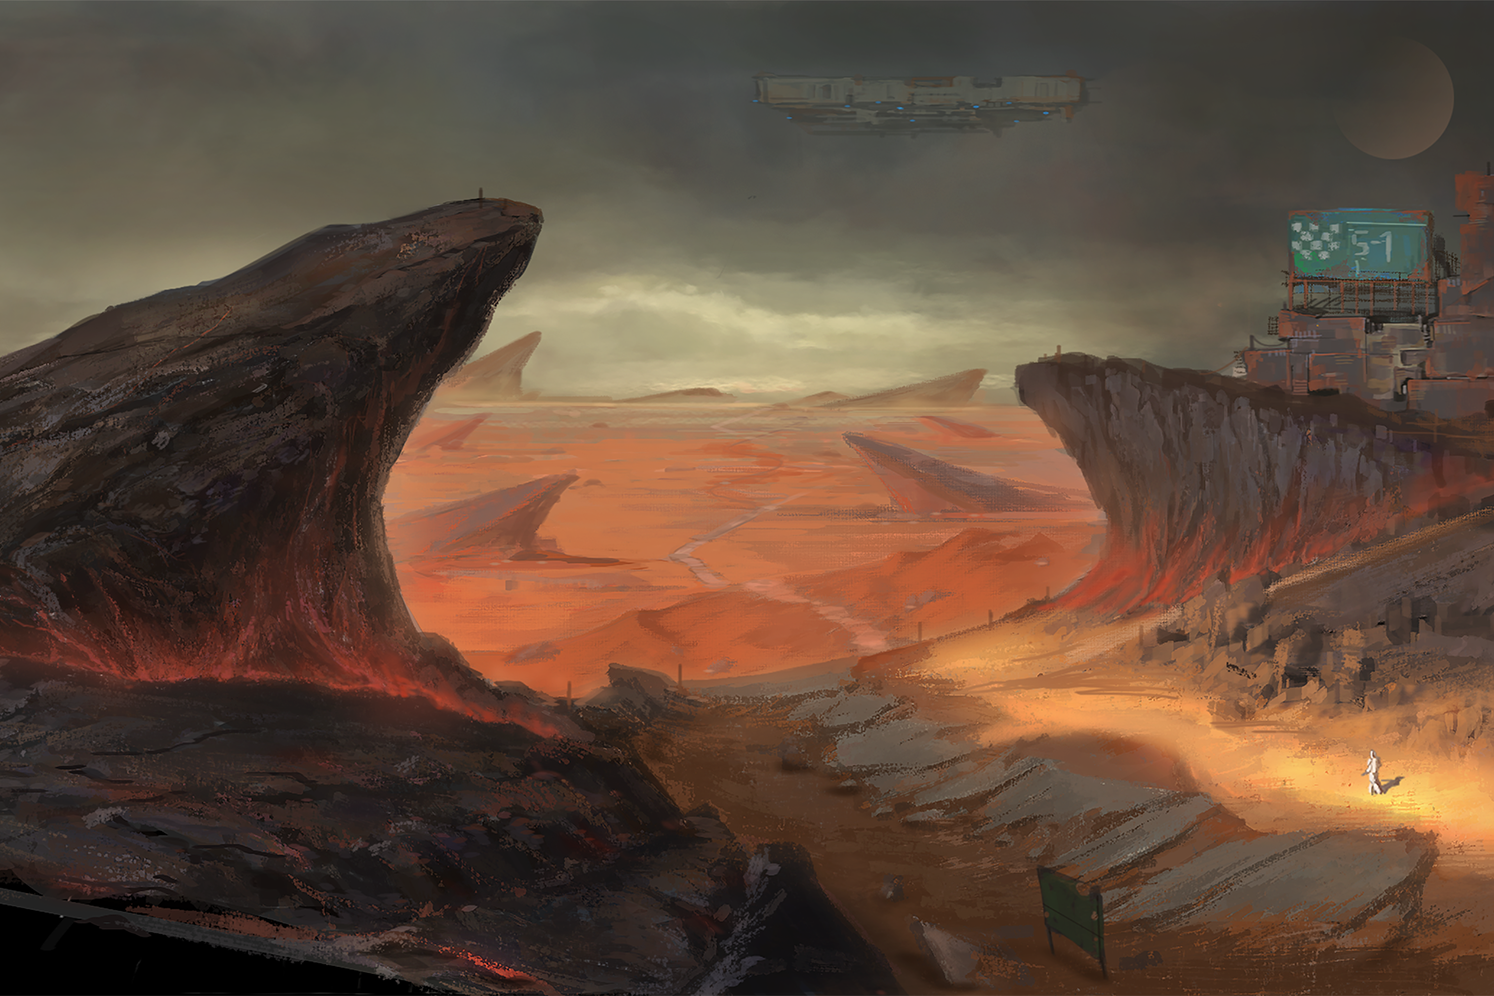 Black Mountain Desert Concept Art by Game Development student Weiyi Qin